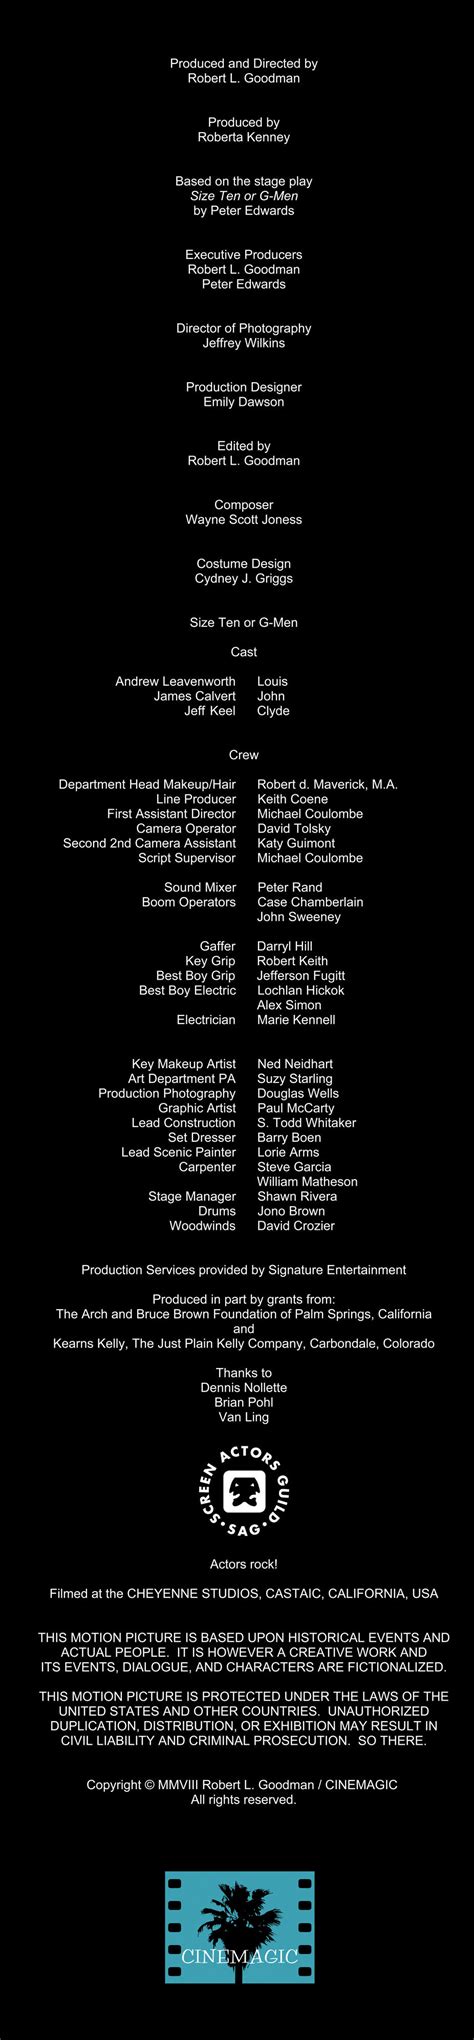 Dead End lyrics credits, cast, crew of song